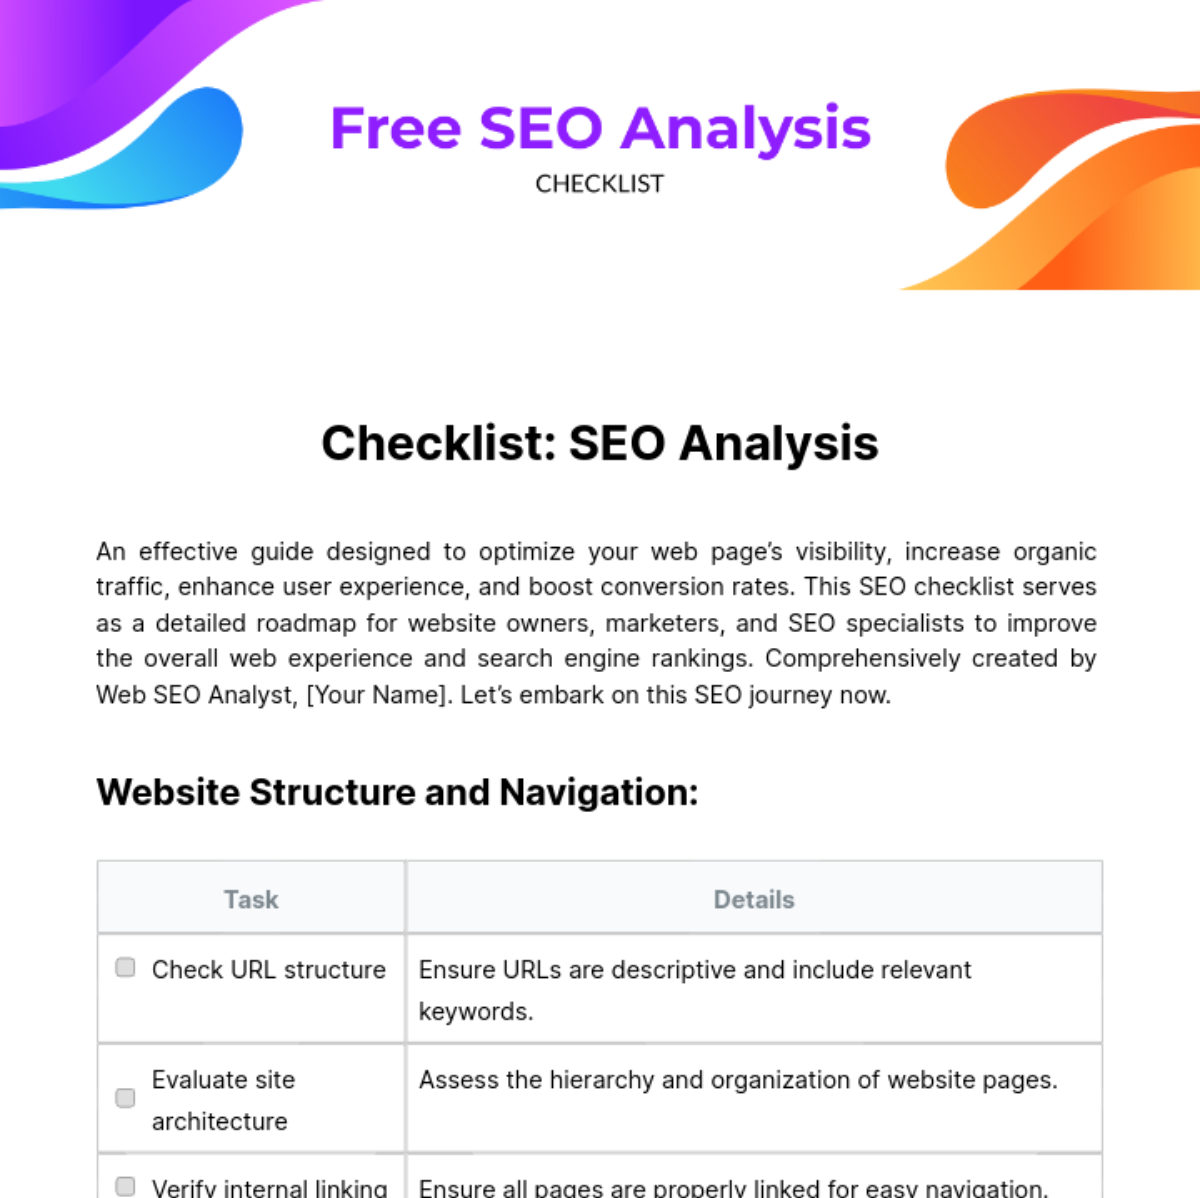 SEO Analysis Checklist Template